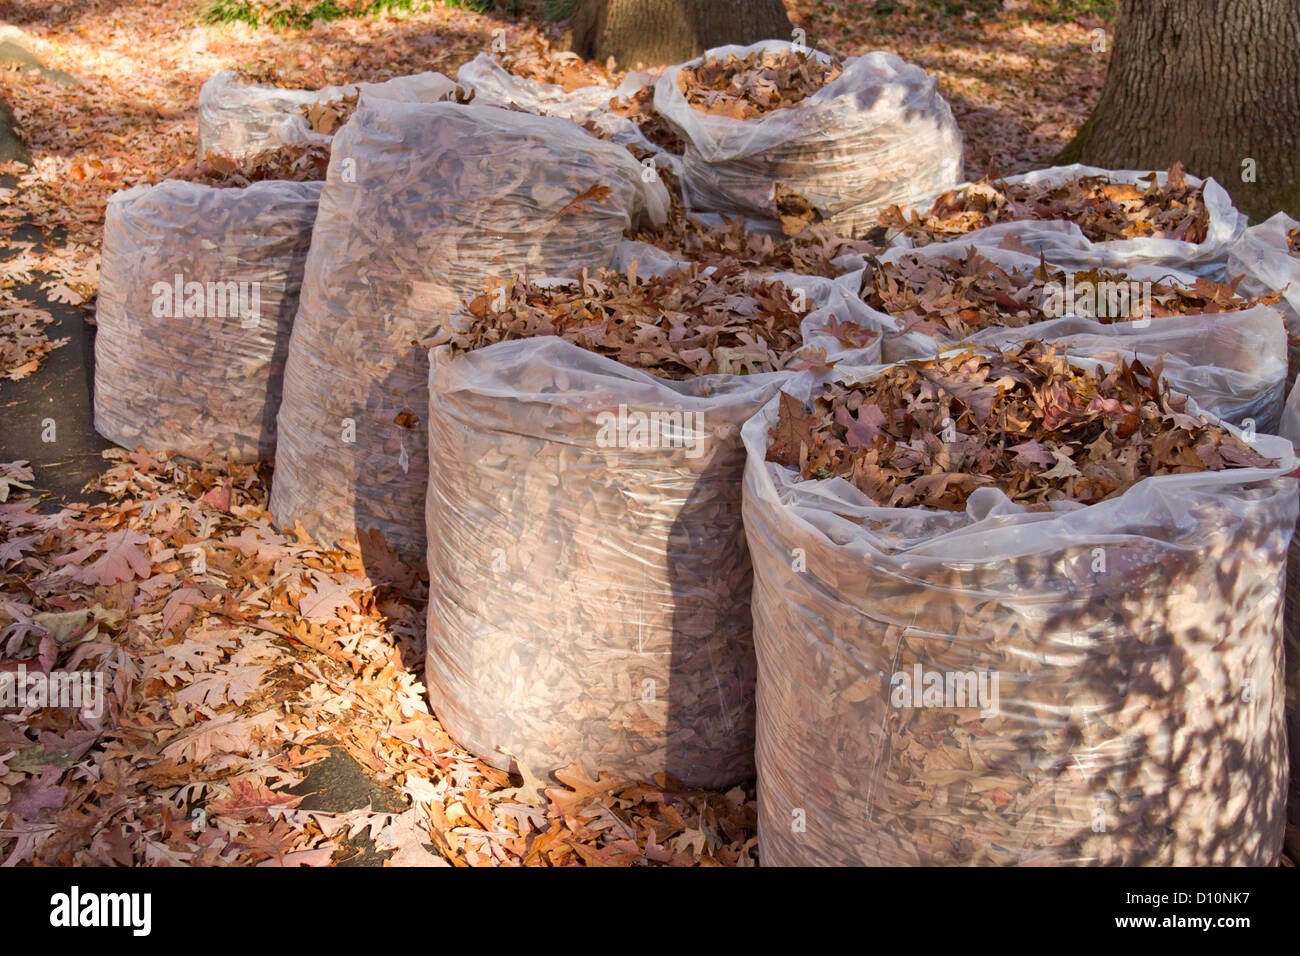 https://c8.alamy.com/comp/D10NK7/large-clear-trash-bags-full-of-fallen-oak-leaves-in-autumn-ready-for-D10NK7.jpg